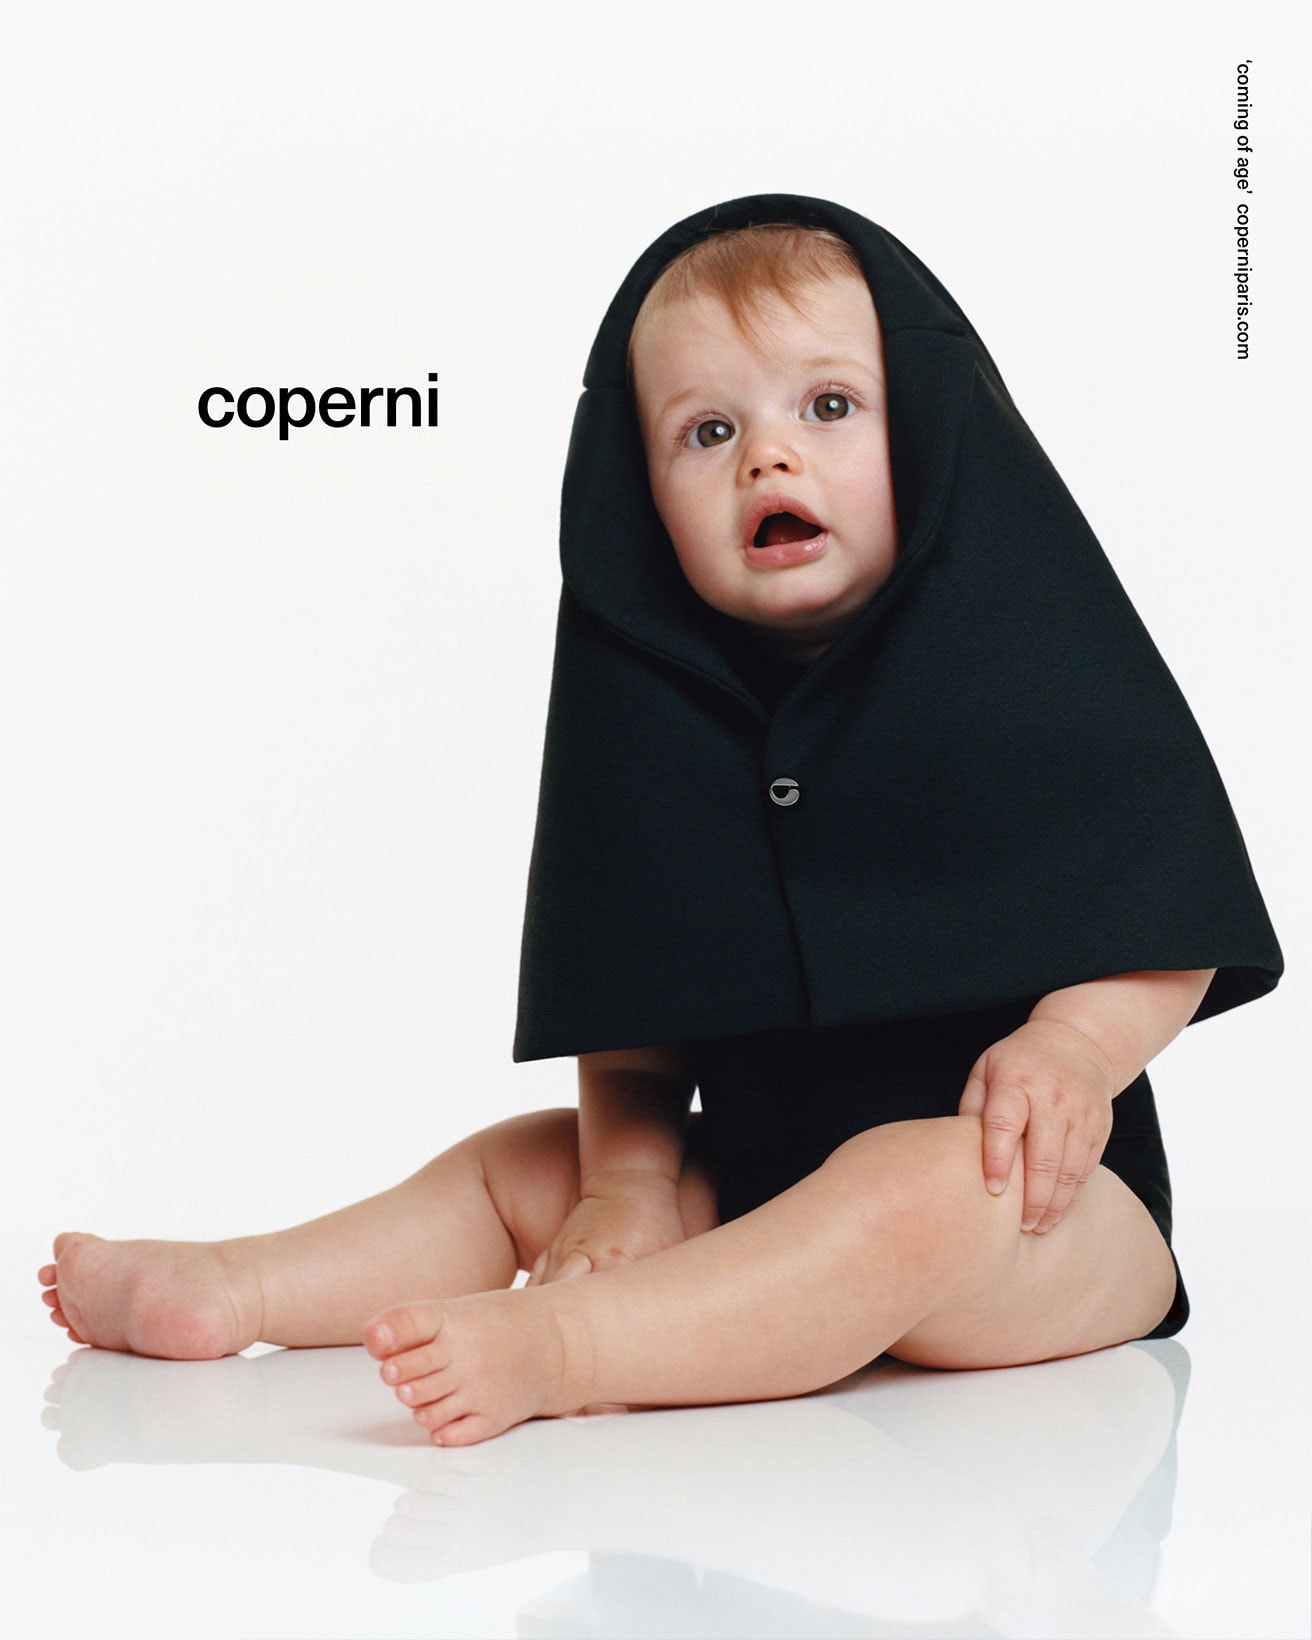 Coperni Fall Winter Campaign Swipe Bag Babies Coming of Age Images